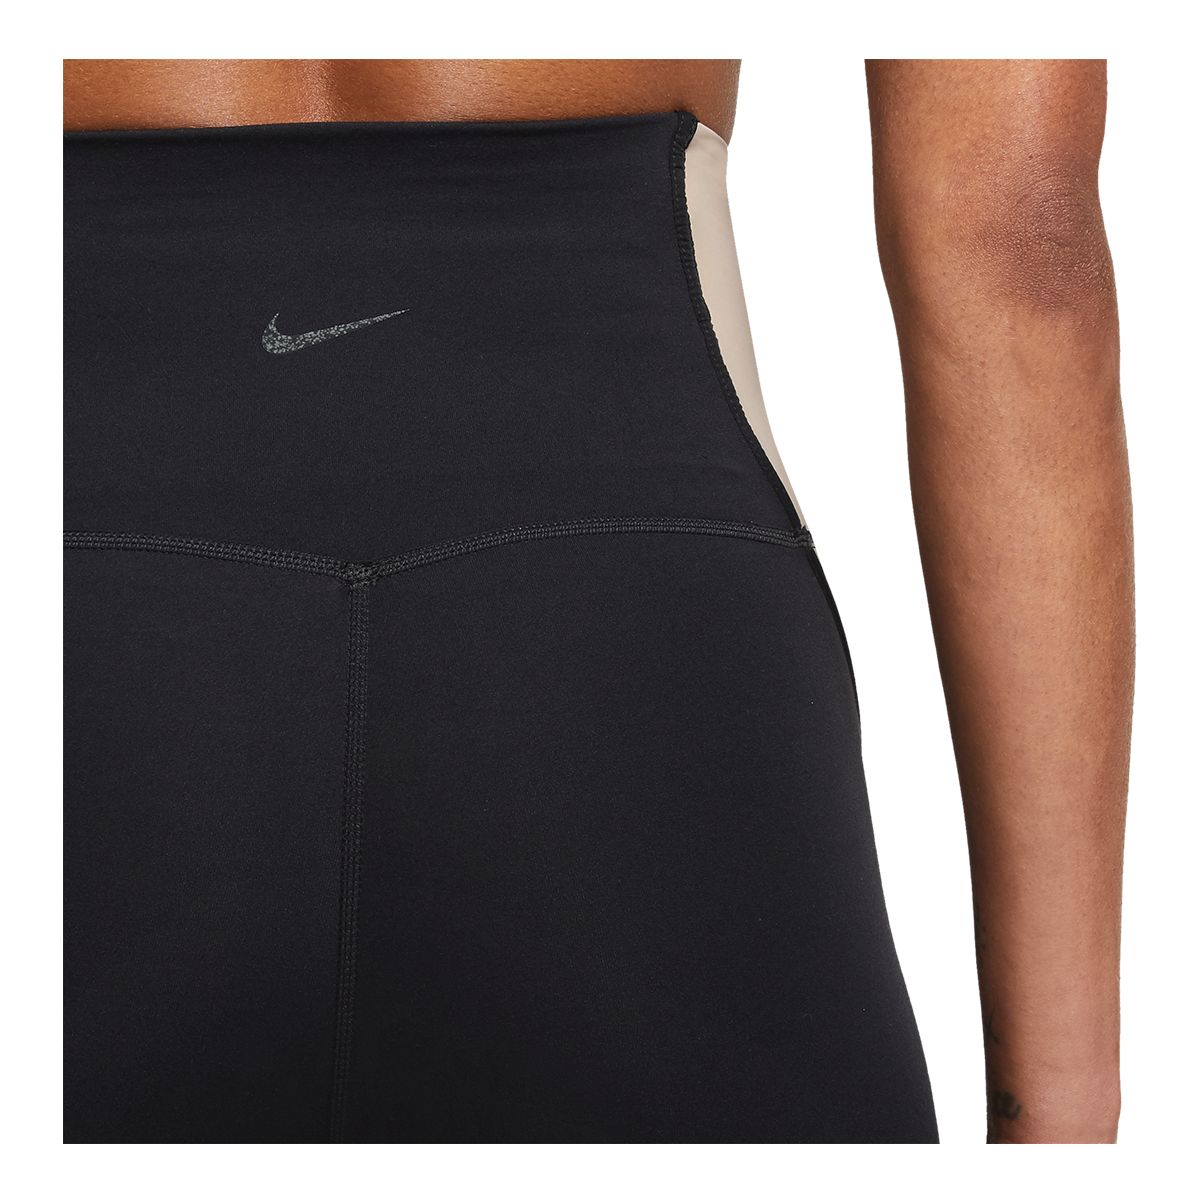 Legging 7/8 woman Nike One Dri-Fit HR Novelty - Baselayers